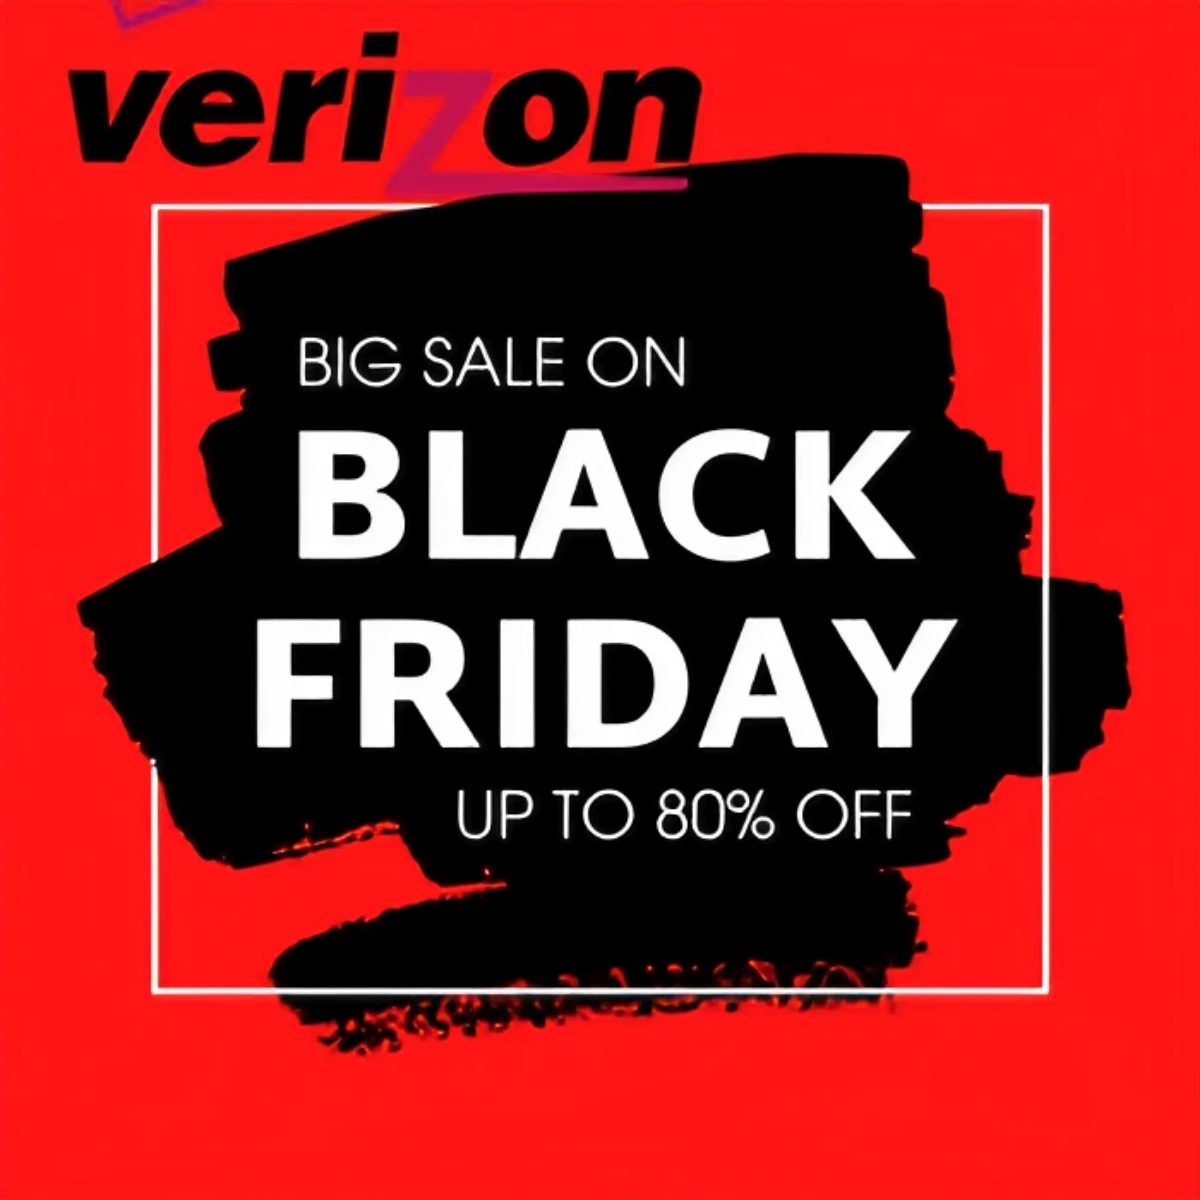 Verizon Black Friday Sale Featured Image